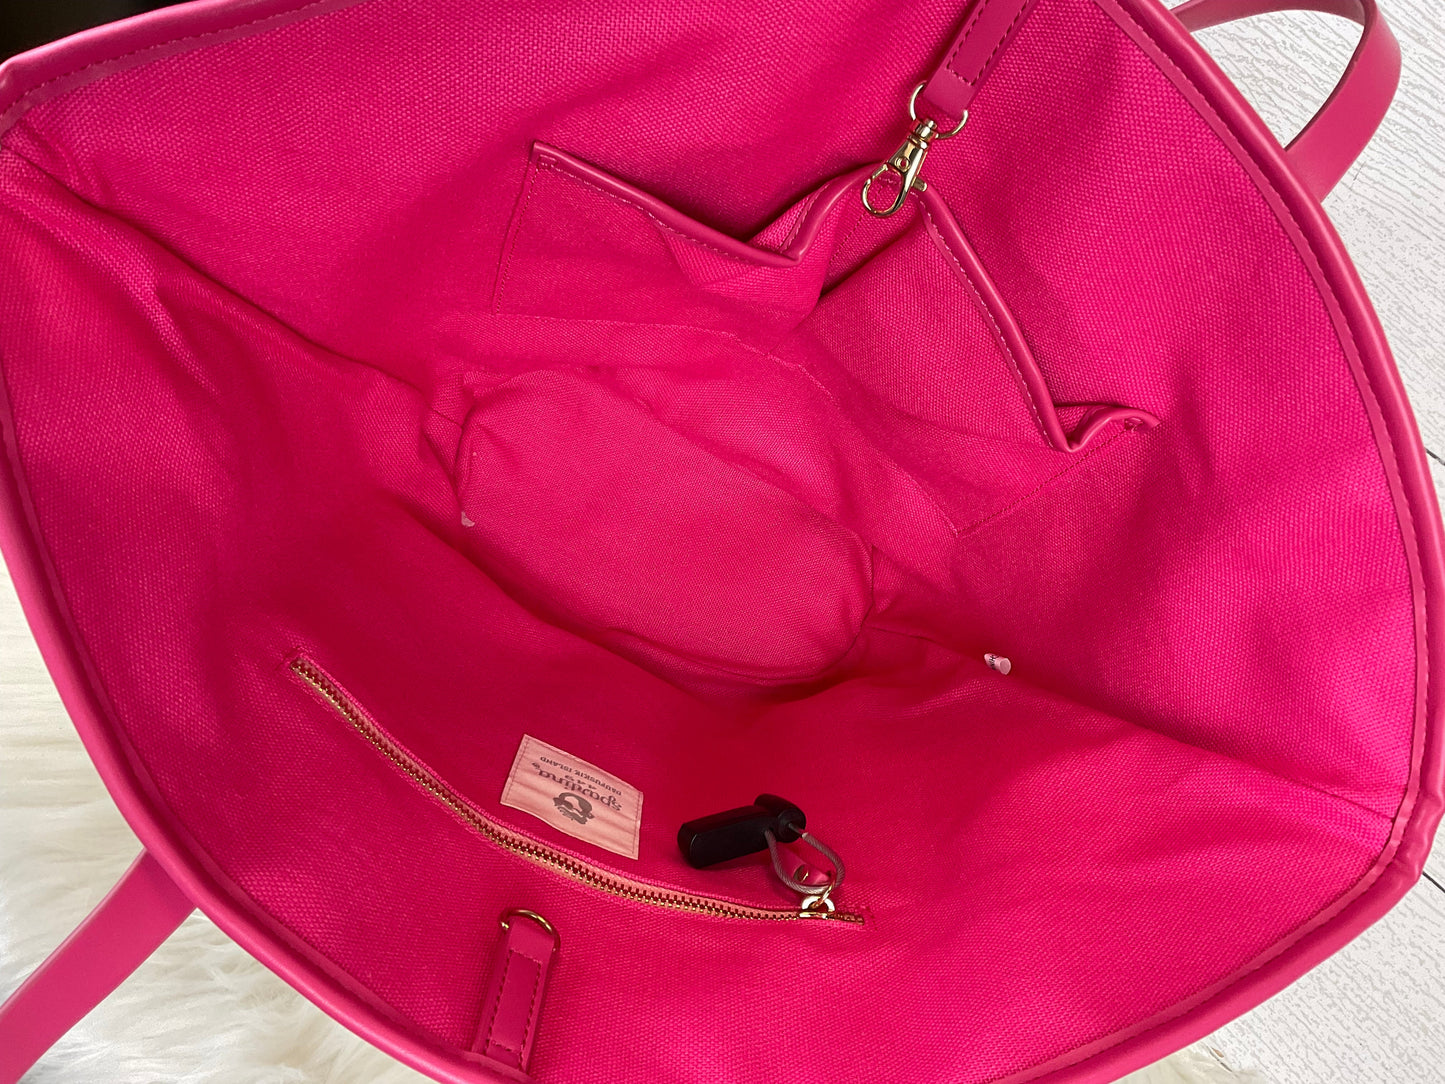 Handbag Designer Spartina, Size Large